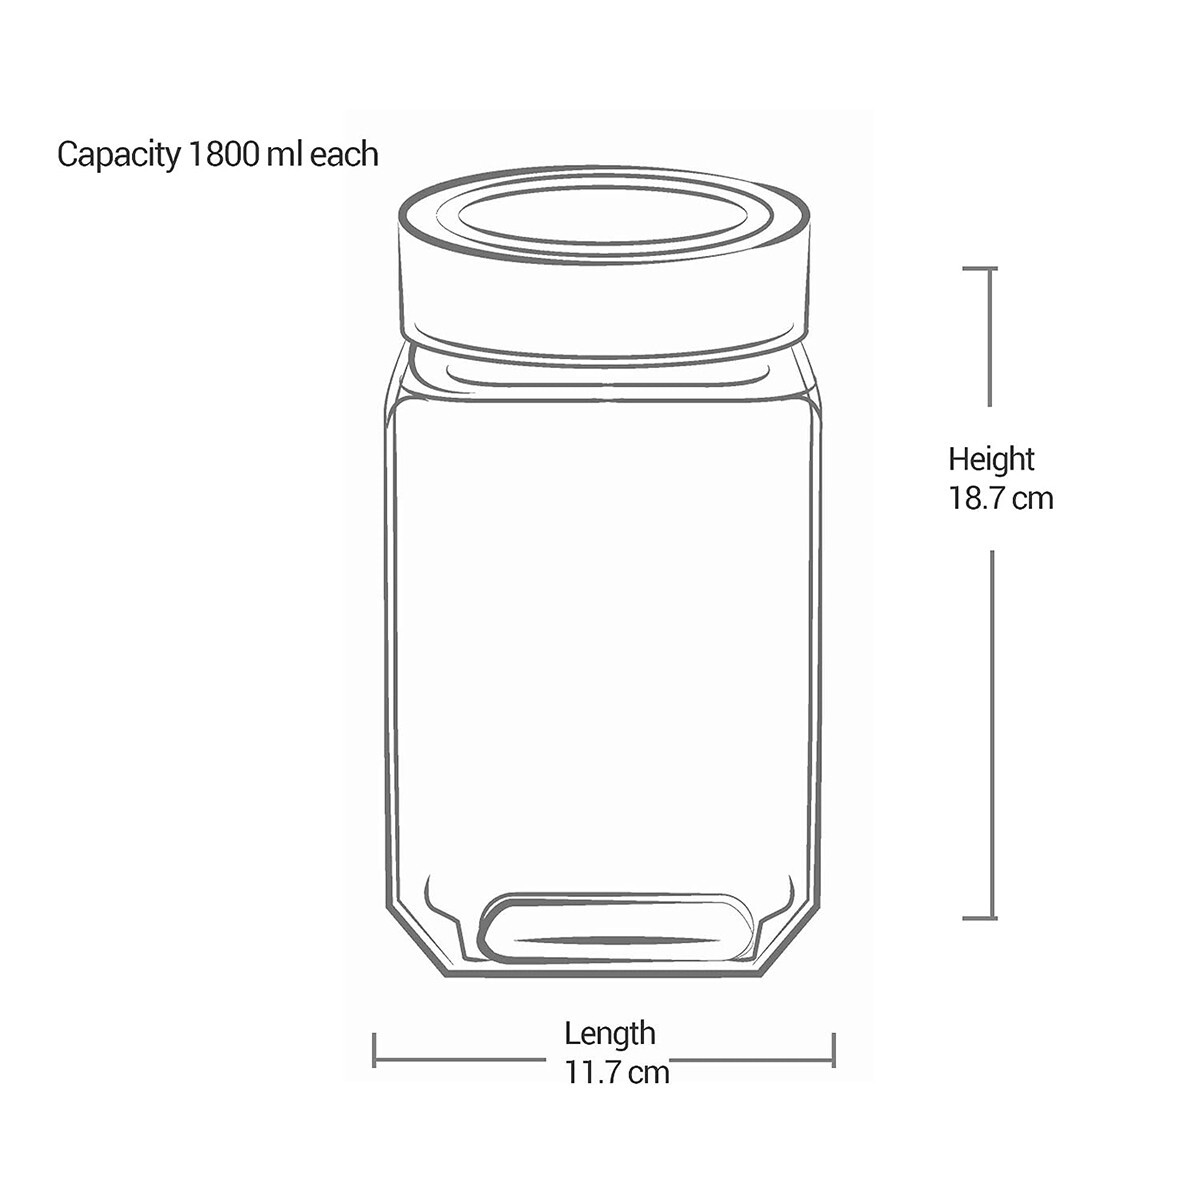 Treo Jar Cube 1800ml